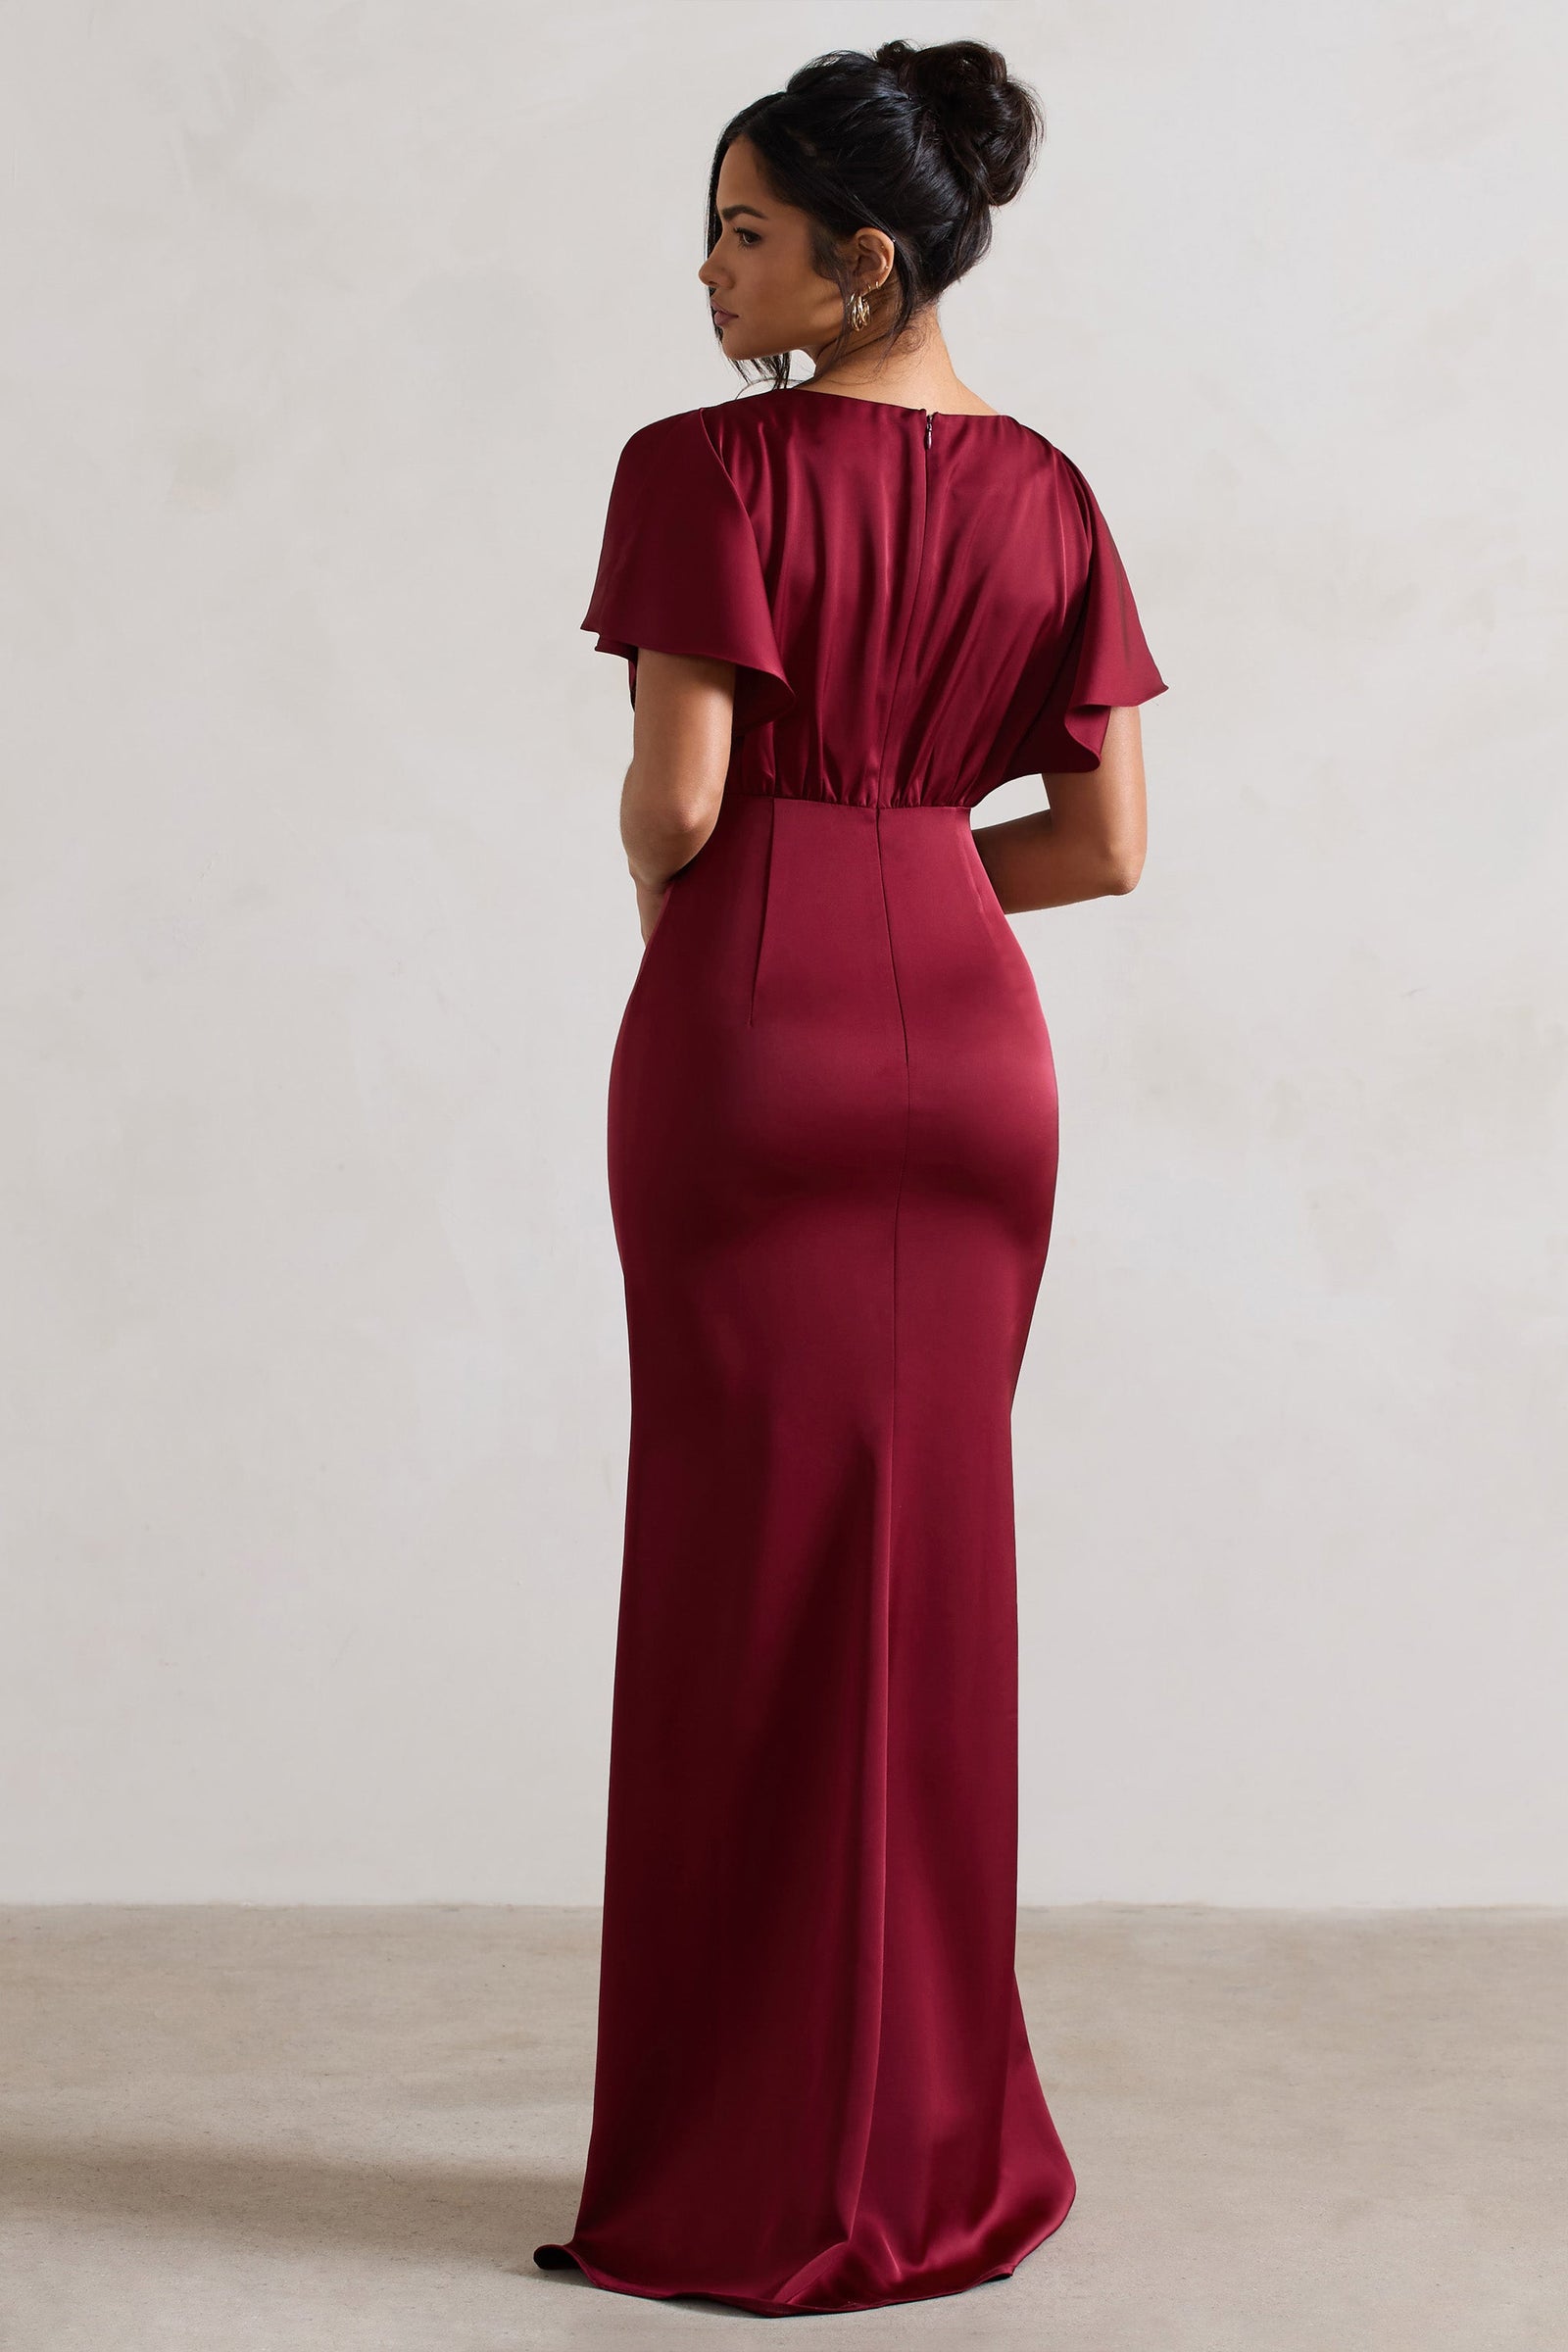 Lovely Burgundy Gown - Long Sleeve Maxi Dress - Maxi Dress - Lulus